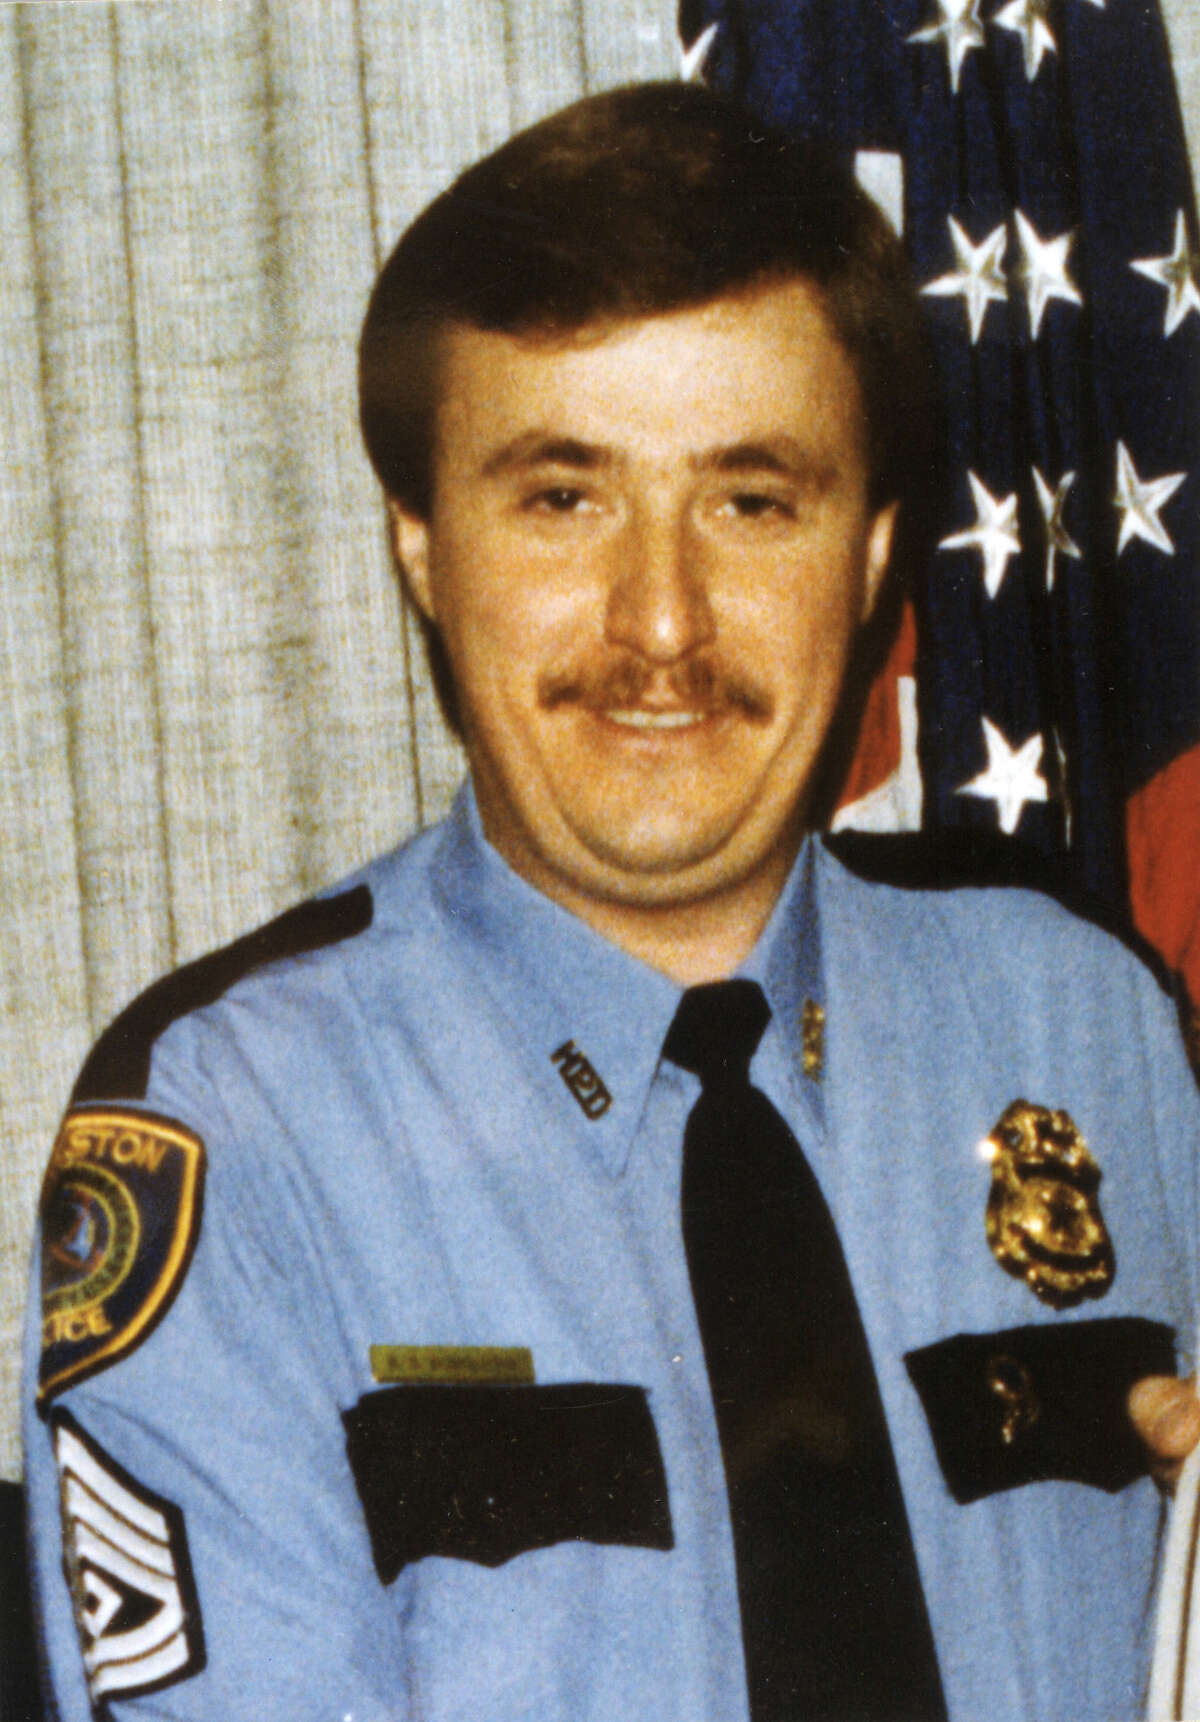 HPD Sgt. Bruno Soboleski was killed in the line of duty on April 7, 1991.